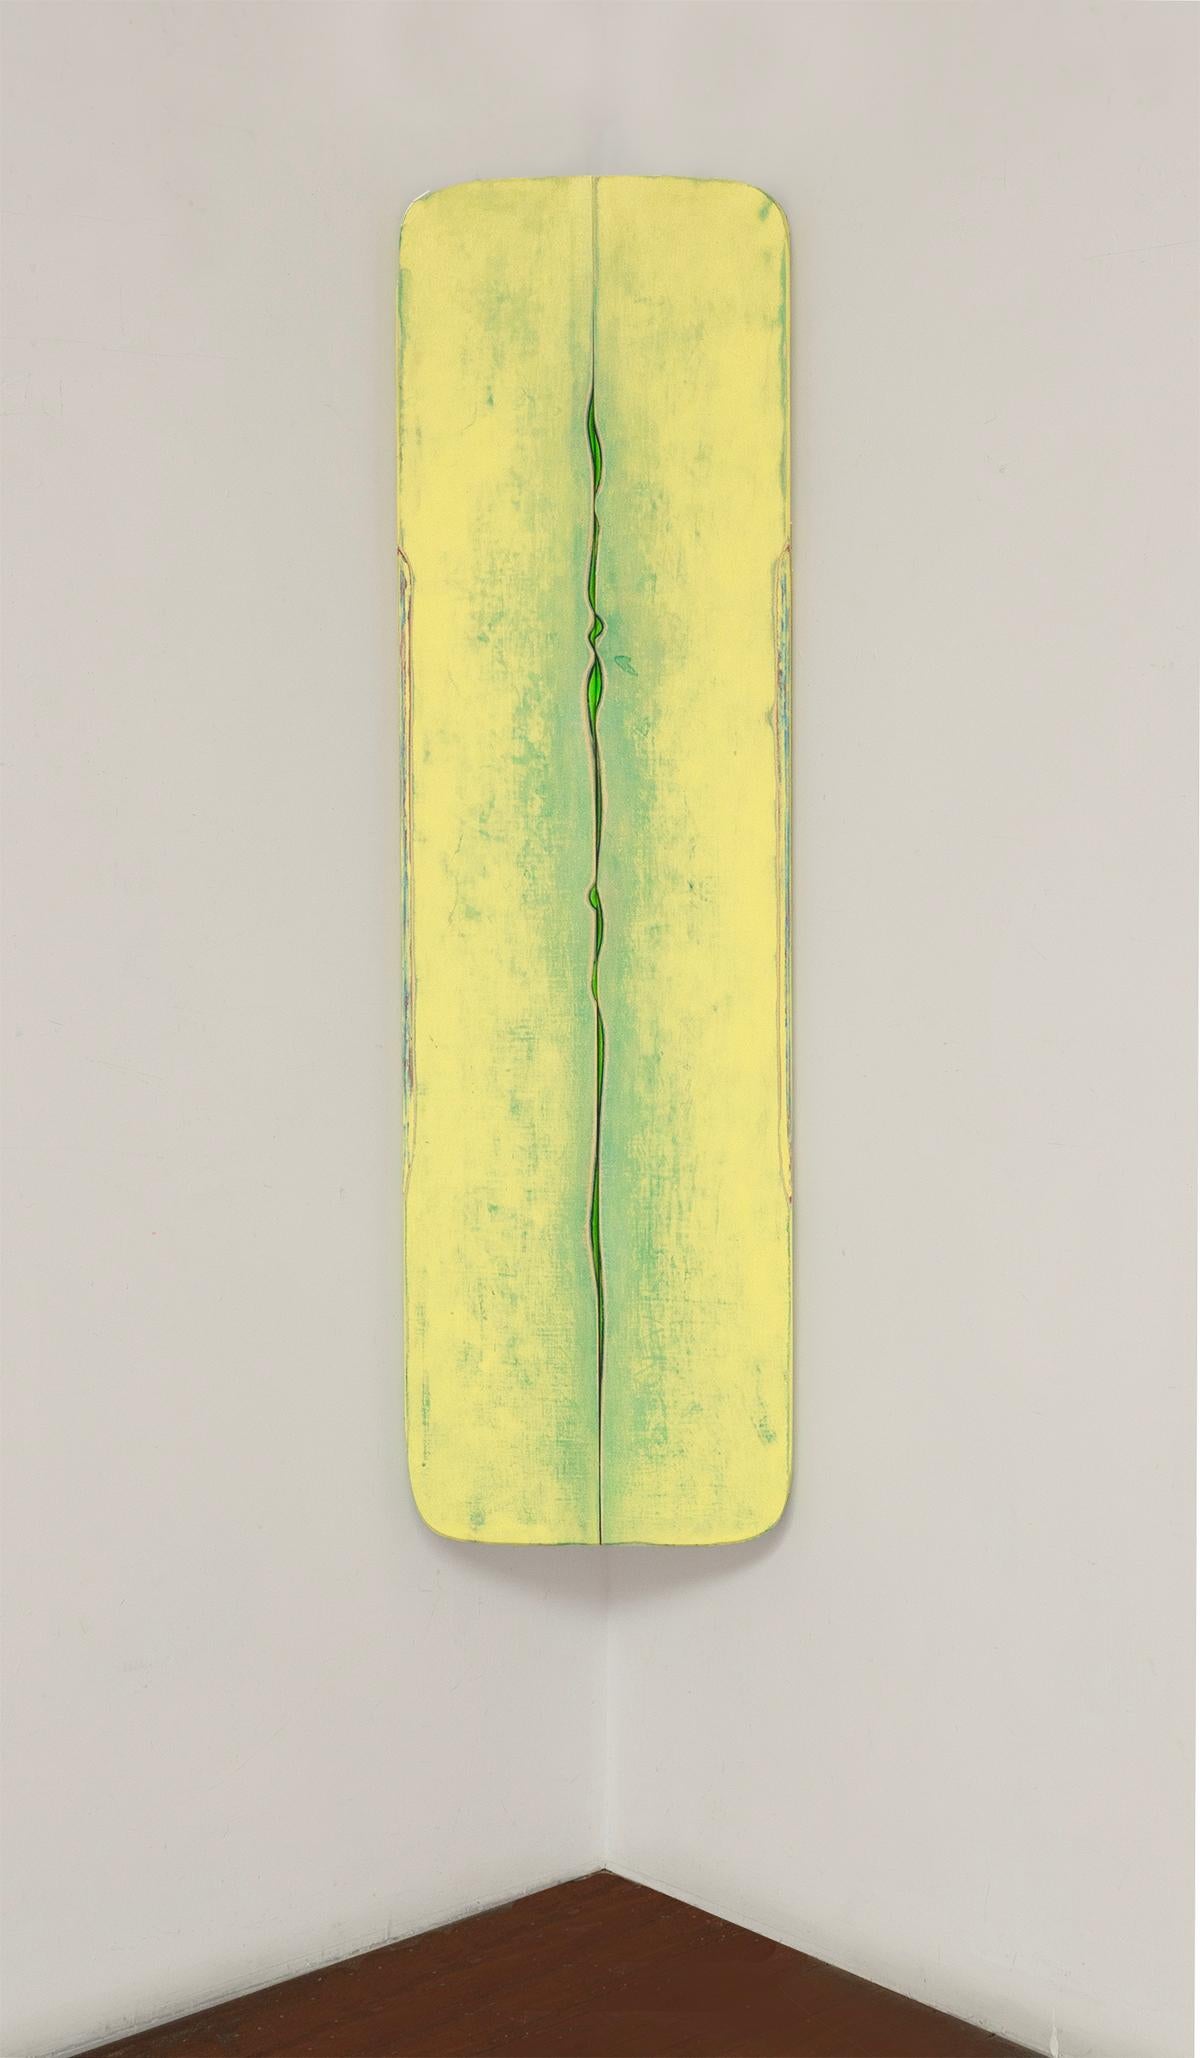 Iridescent, pale yellow, bright green, corner sculptural painting on wood - Mixed Media Art by Robert Yasuda